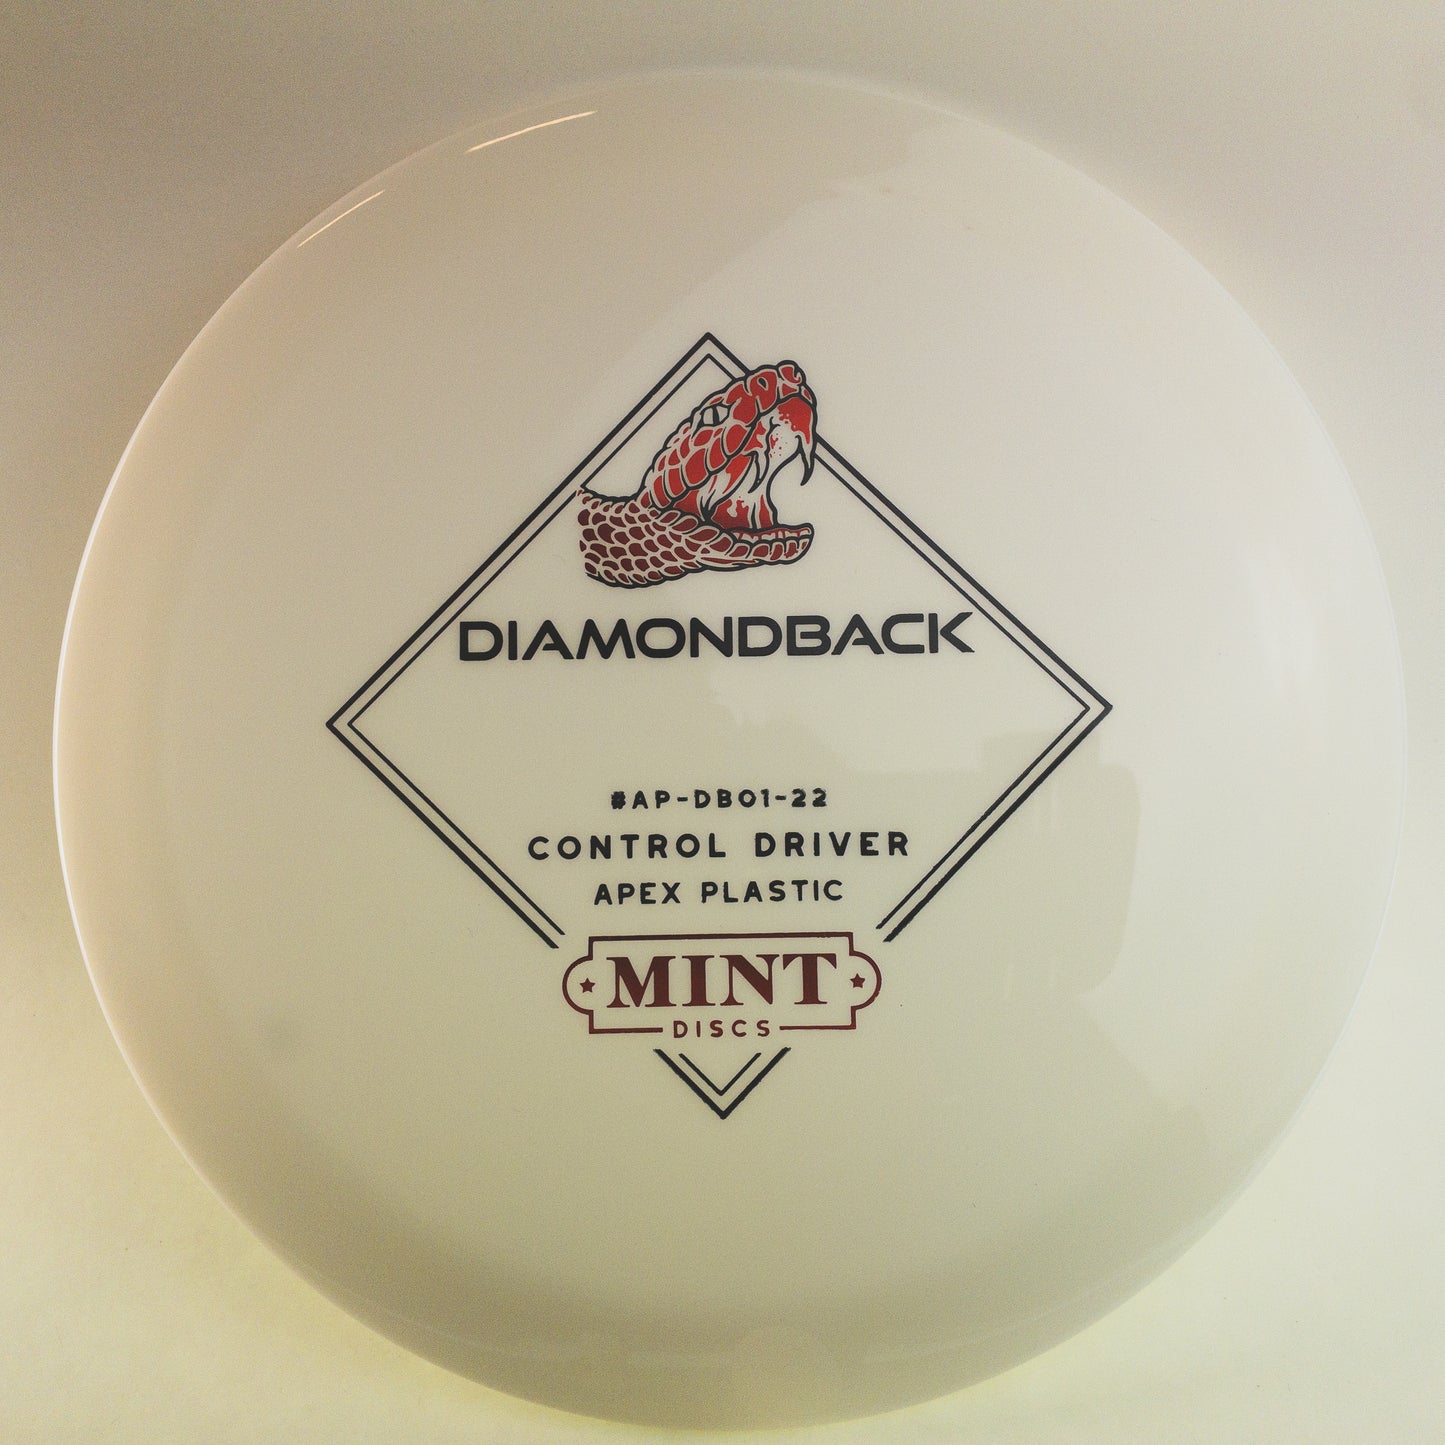 Mint Discs Apex Diamondback